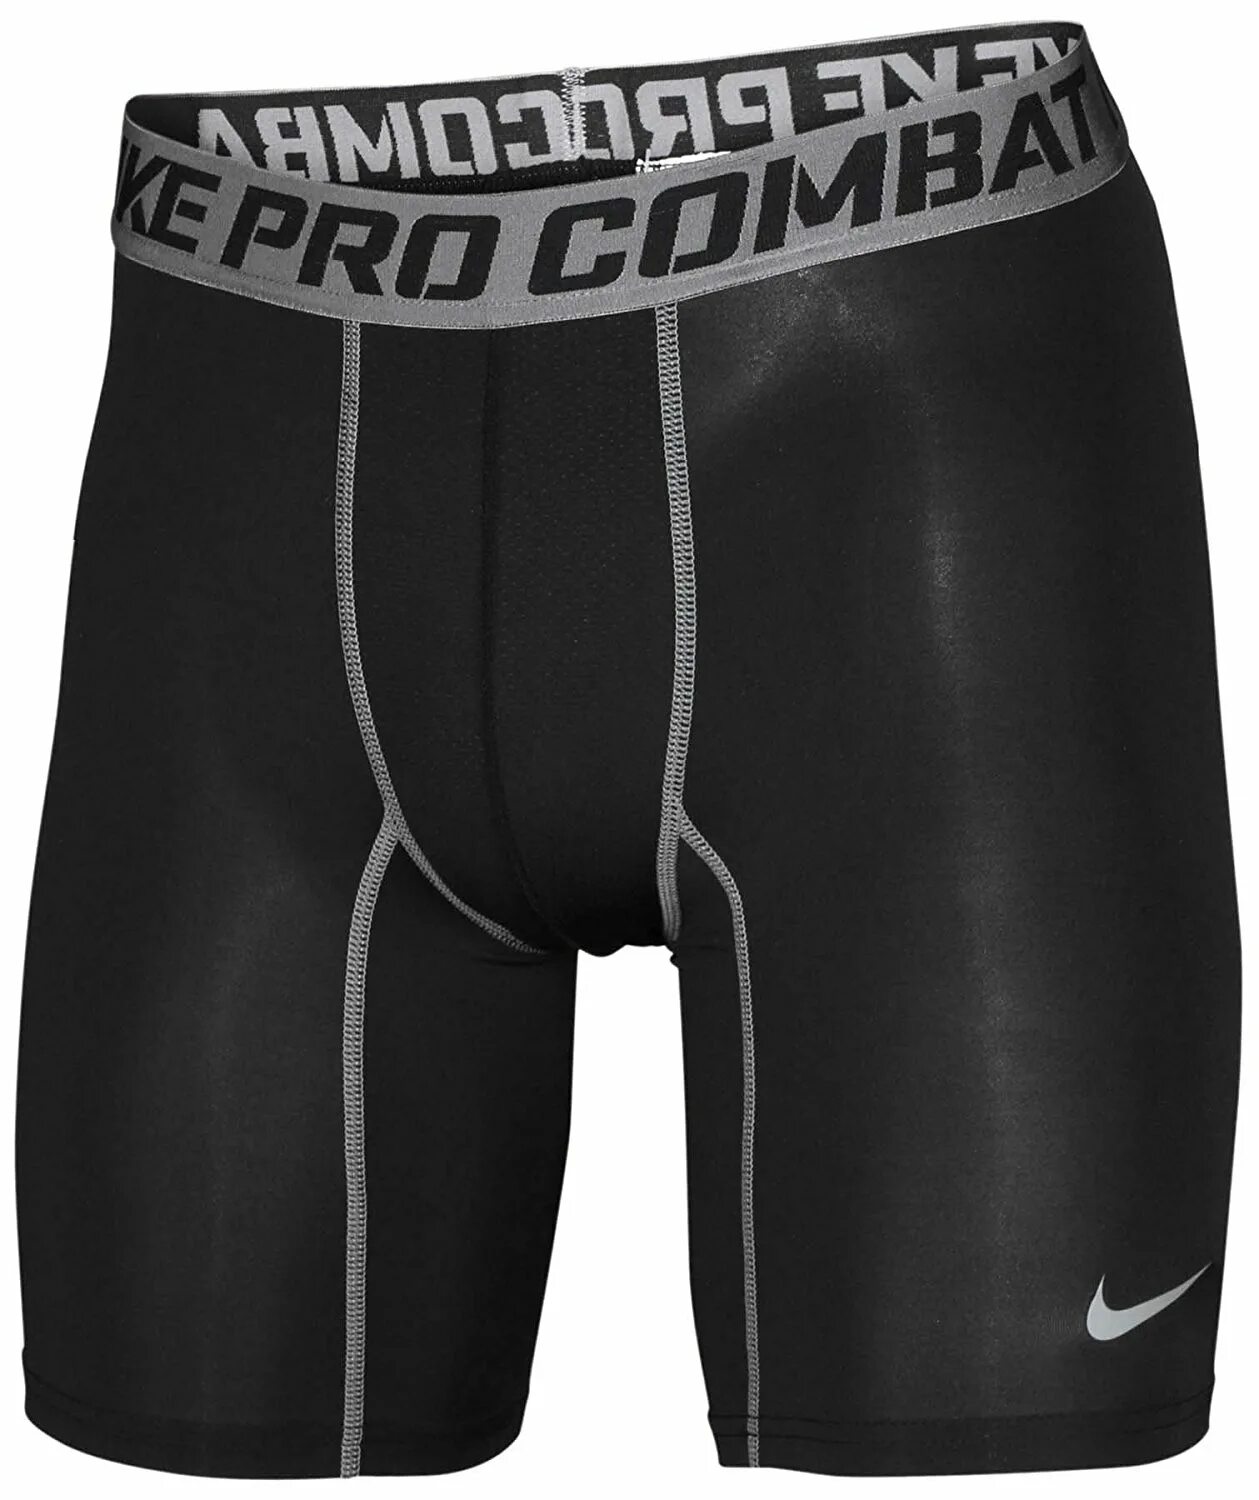 Тайтсы Nike Pro Combat. Nike Combat Compression. Nike Pro Combat Phenom,. Nike pro combat